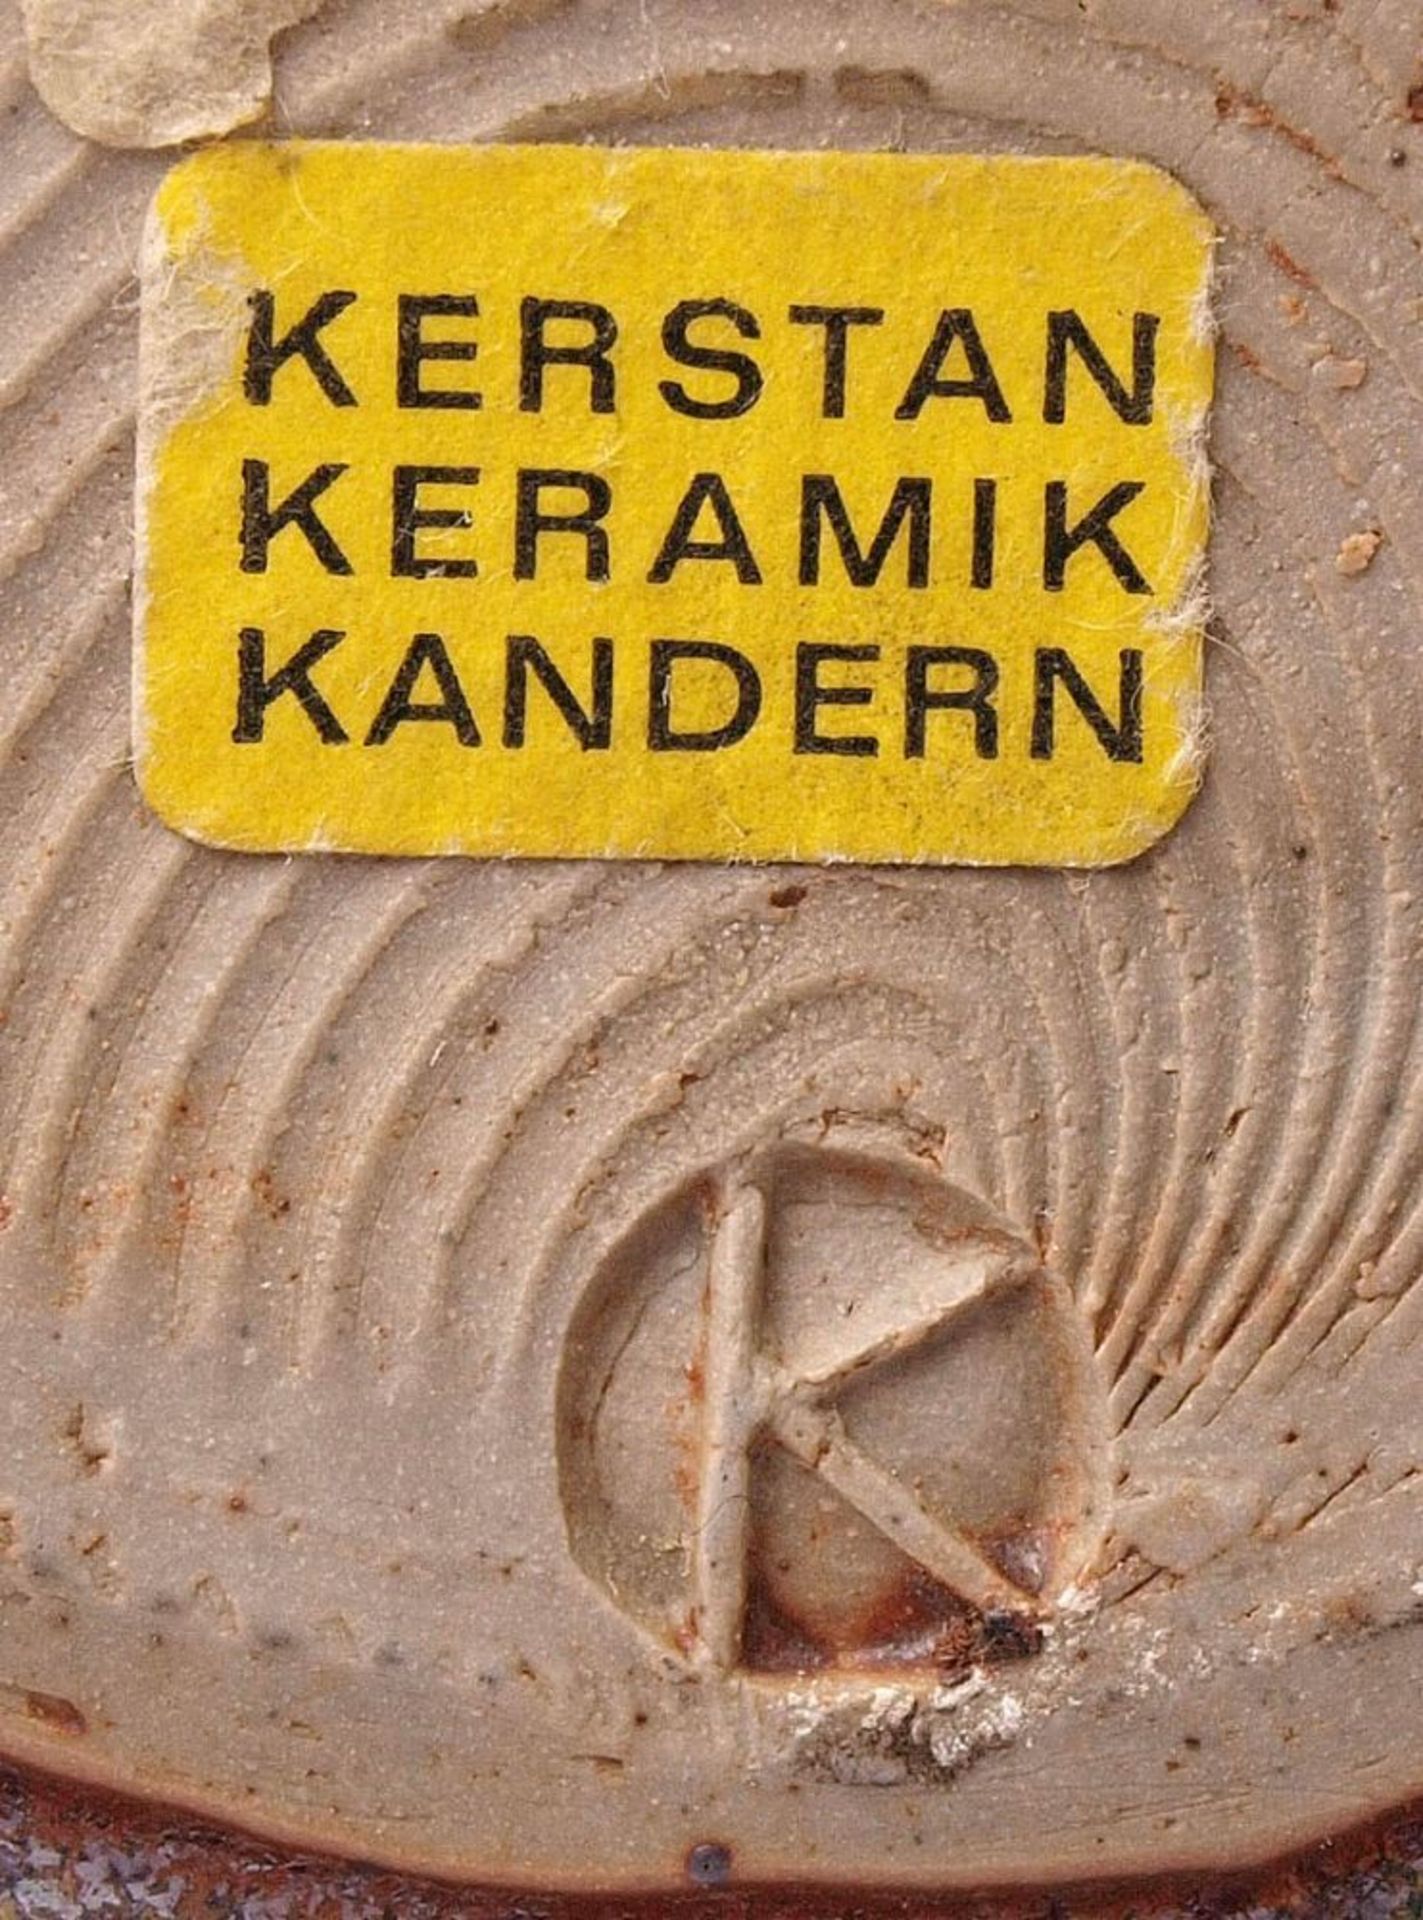 Kürbisvase, Kerstan, Kandern Oxydglasur über braunem Fond. Pressmarke, originales Etikett. H.20cm. - Bild 2 aus 2